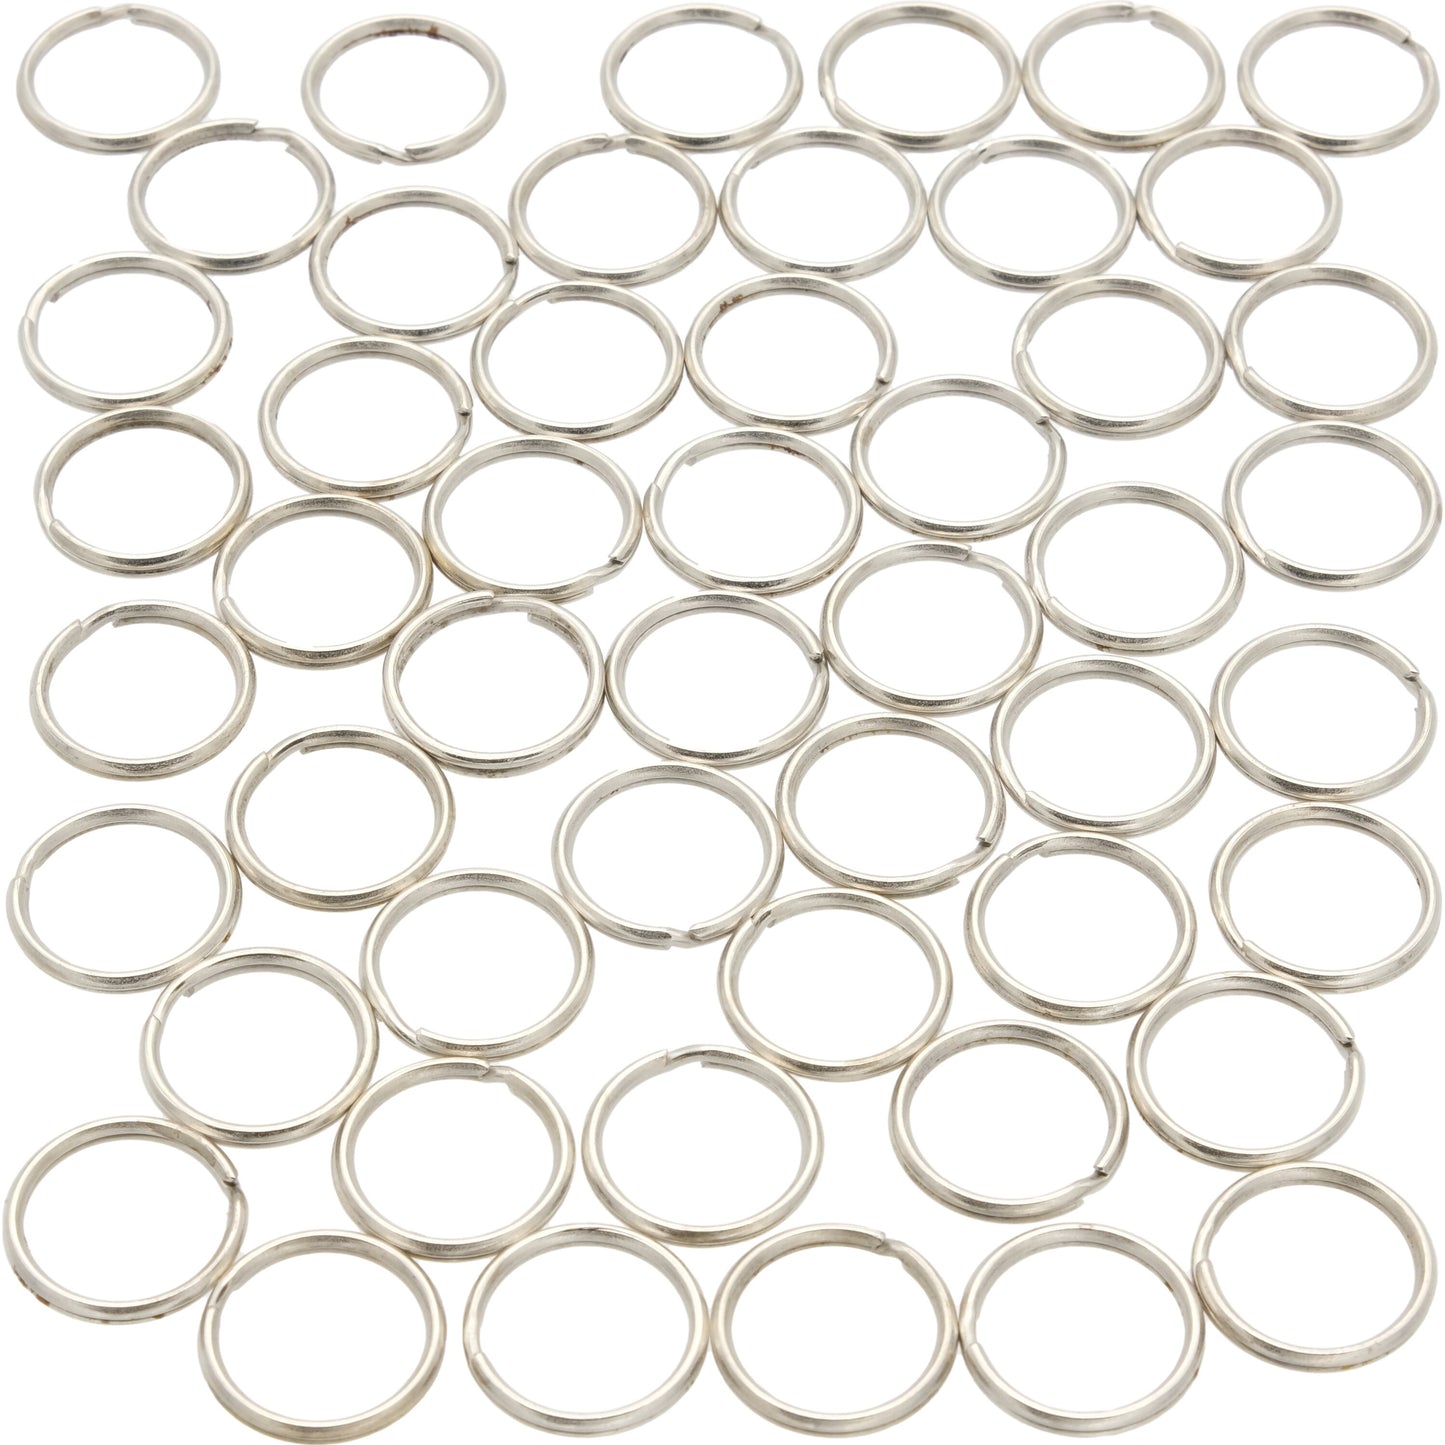 Nickel Plated Key Chain Ring W/ Chain & Metal Split Rings Findings Kit 100 Pcs